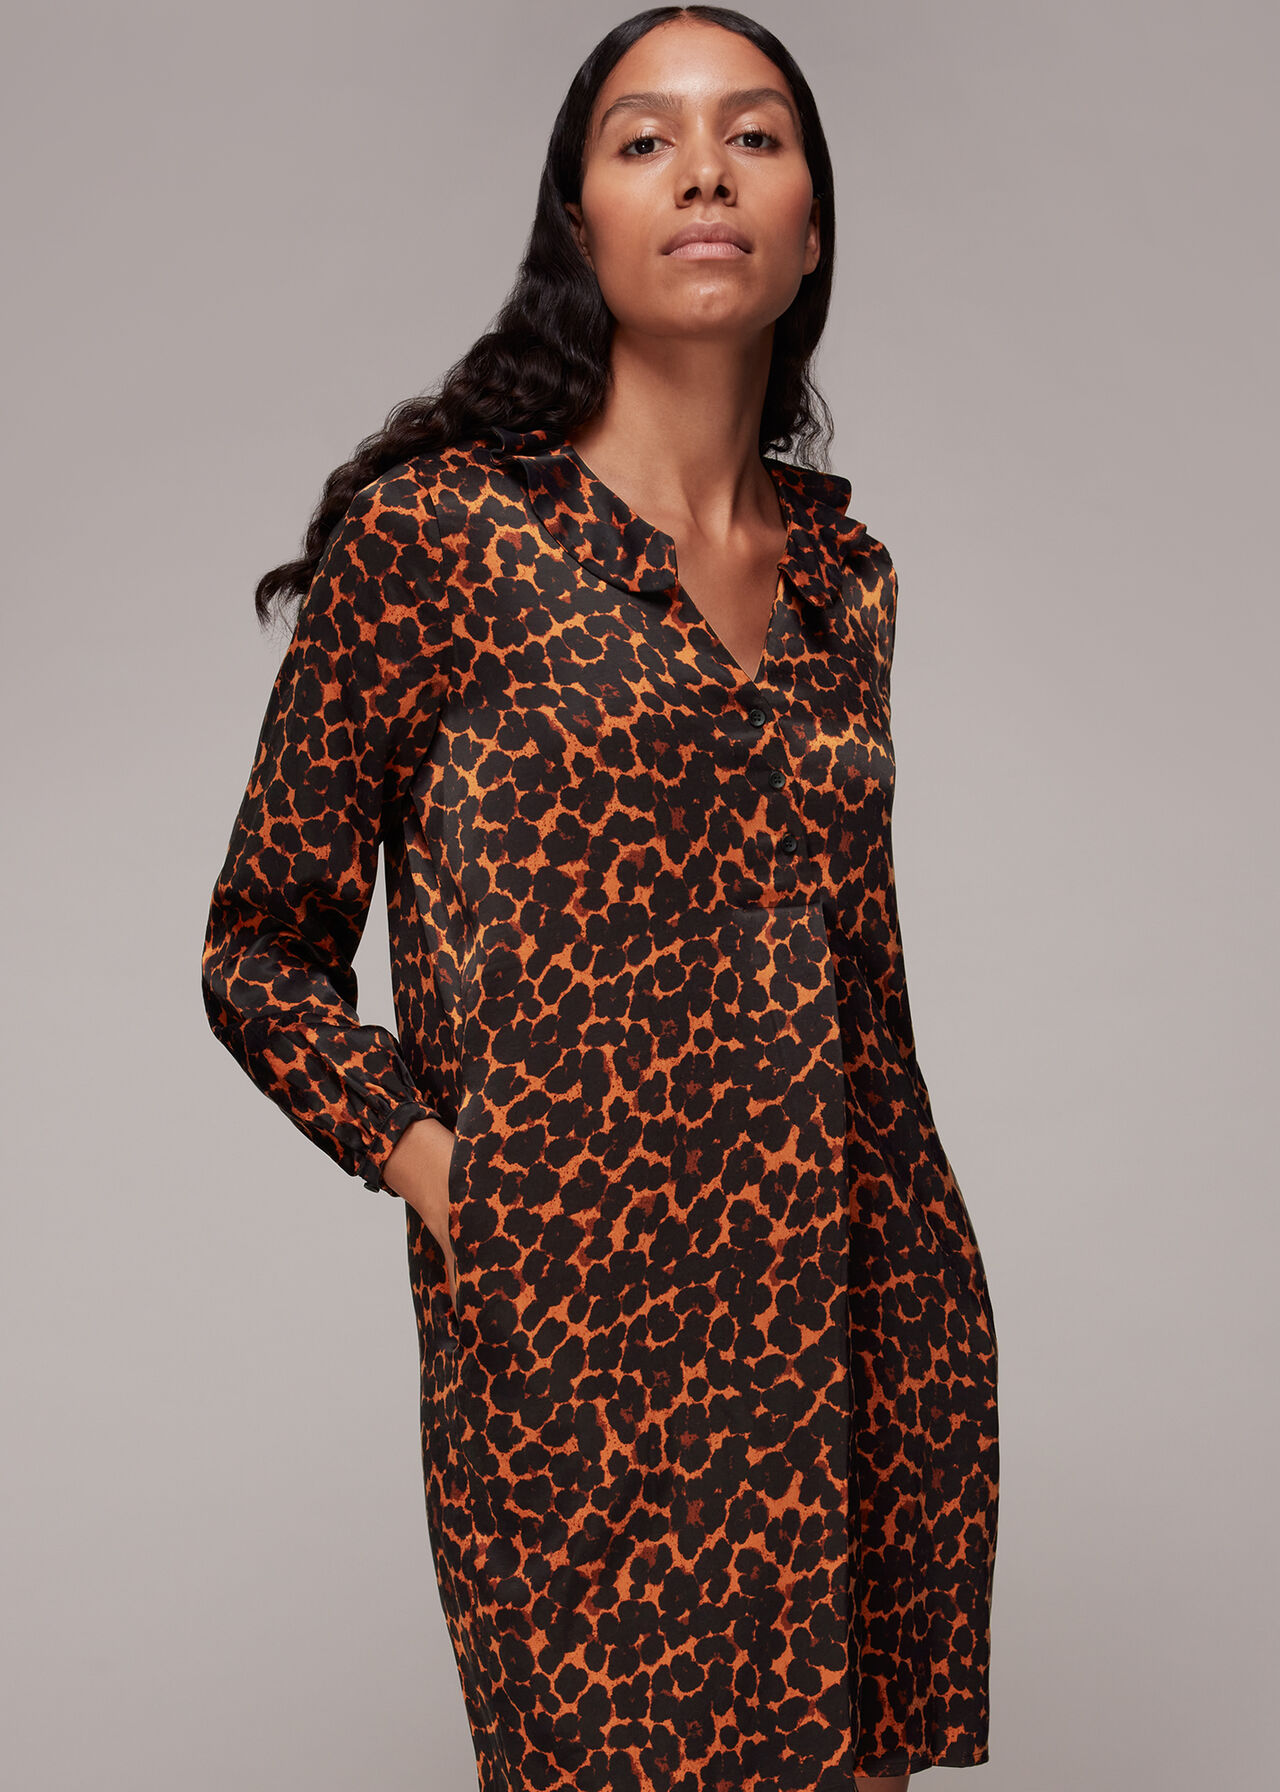 Leopard Print Smudge Animal Frill Dress | WHISTLES |